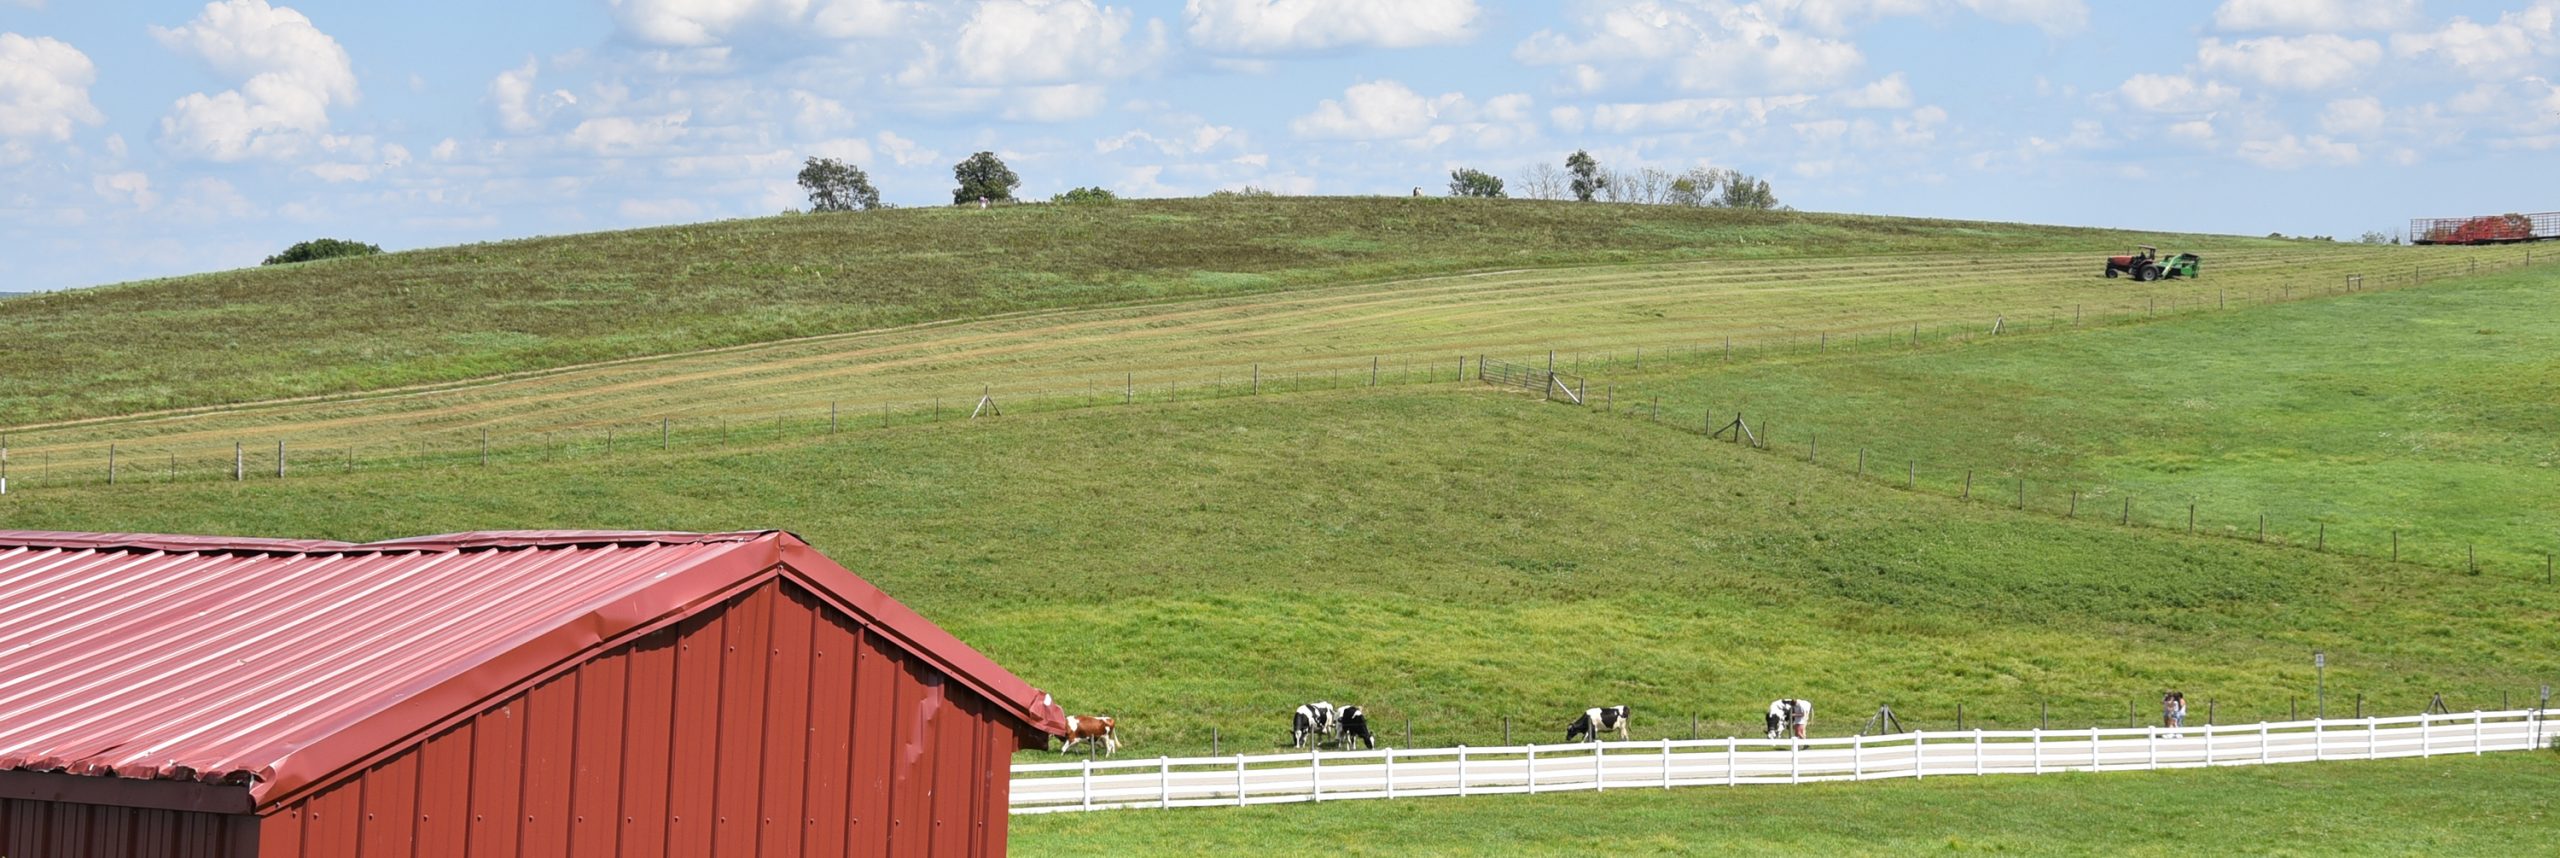 A view of Horsebarn hill